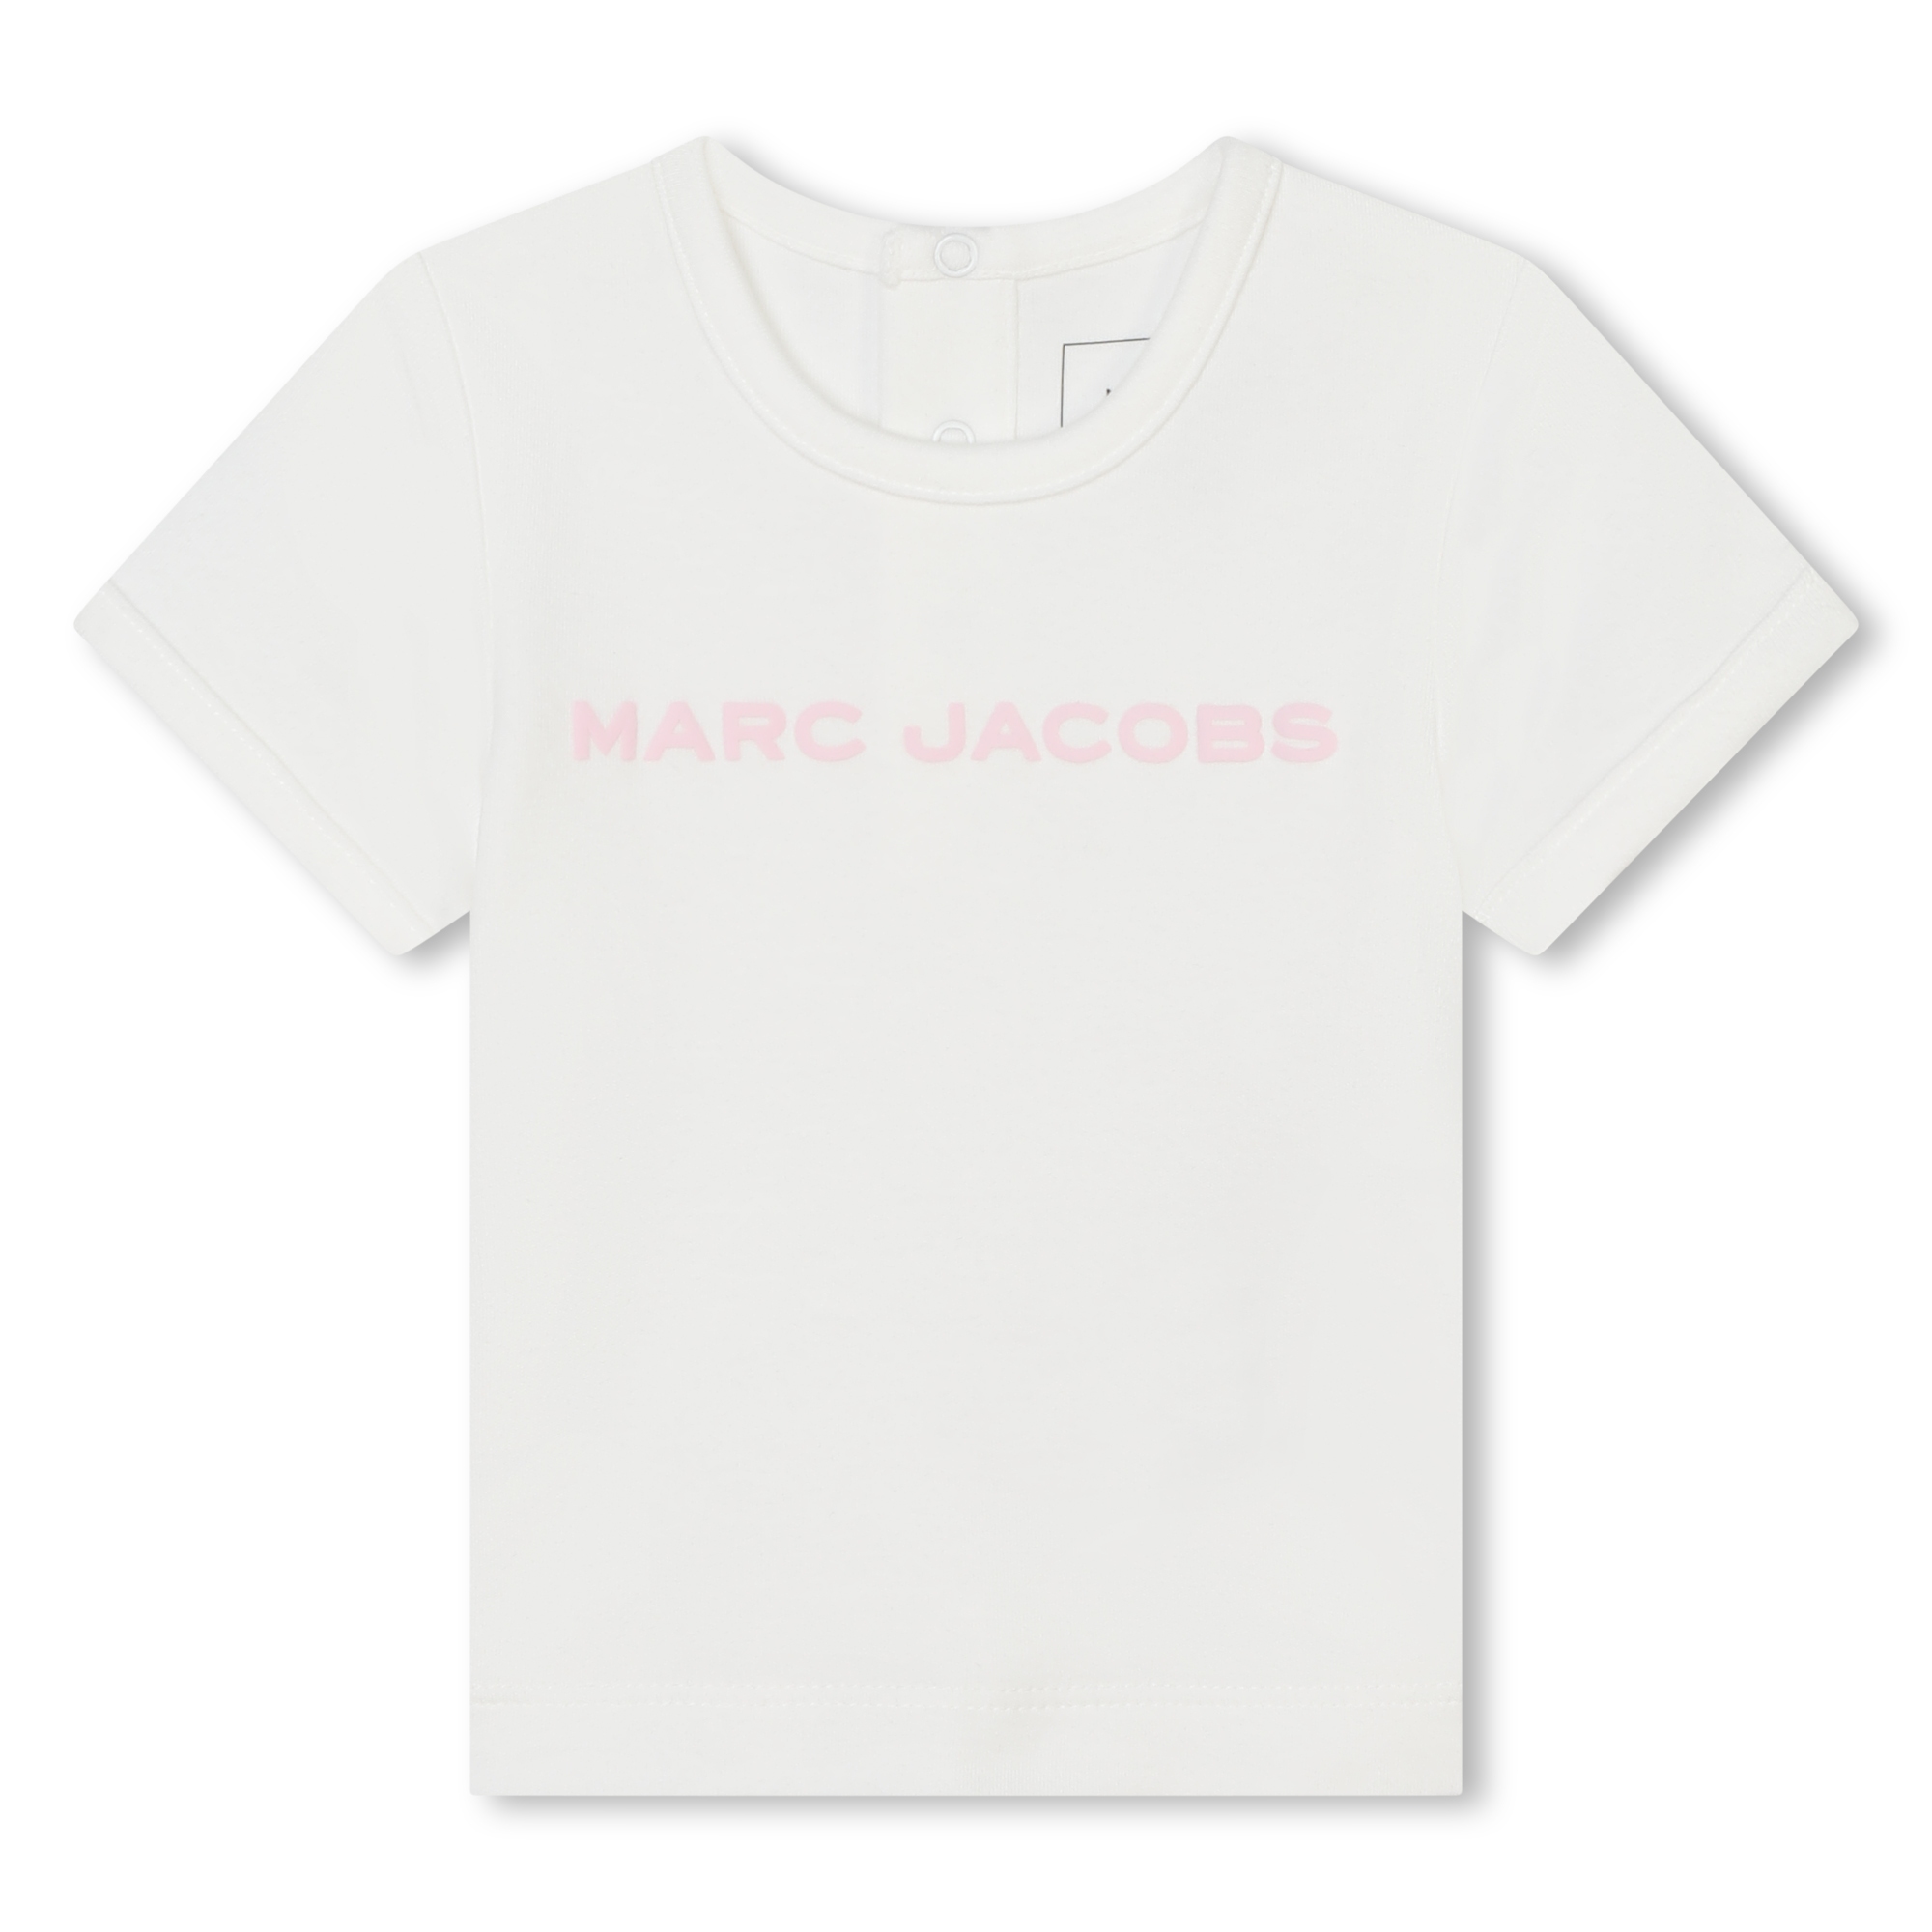 Camiseta y pantalón de algodón MARC JACOBS para UNISEXO